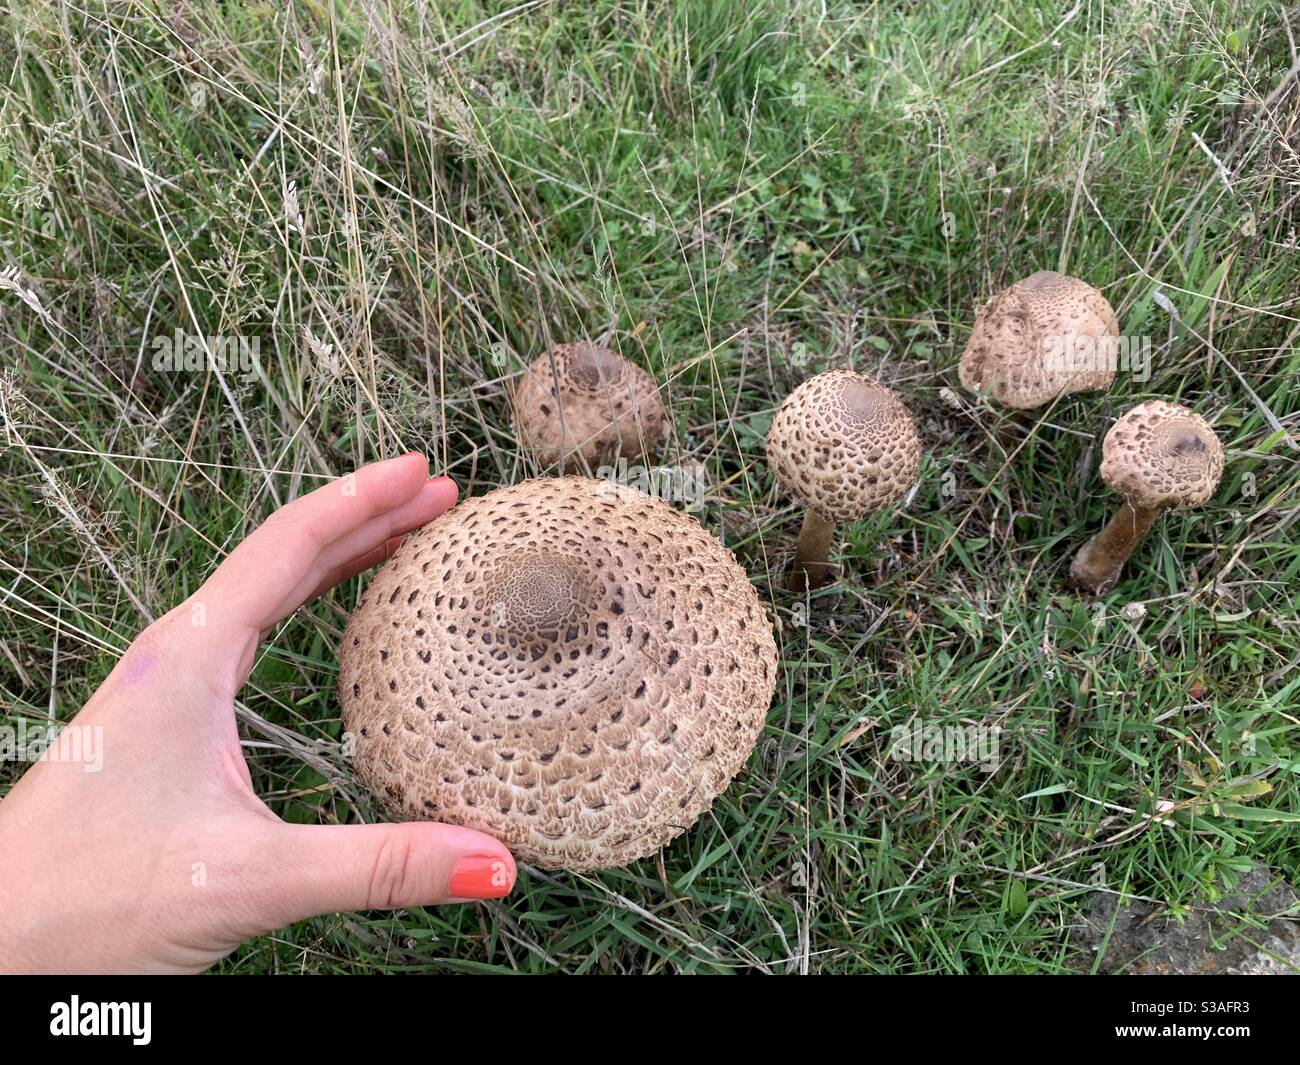 Woman’s hand touching shaggy parasol mushroom on grassy ground Stock Photo